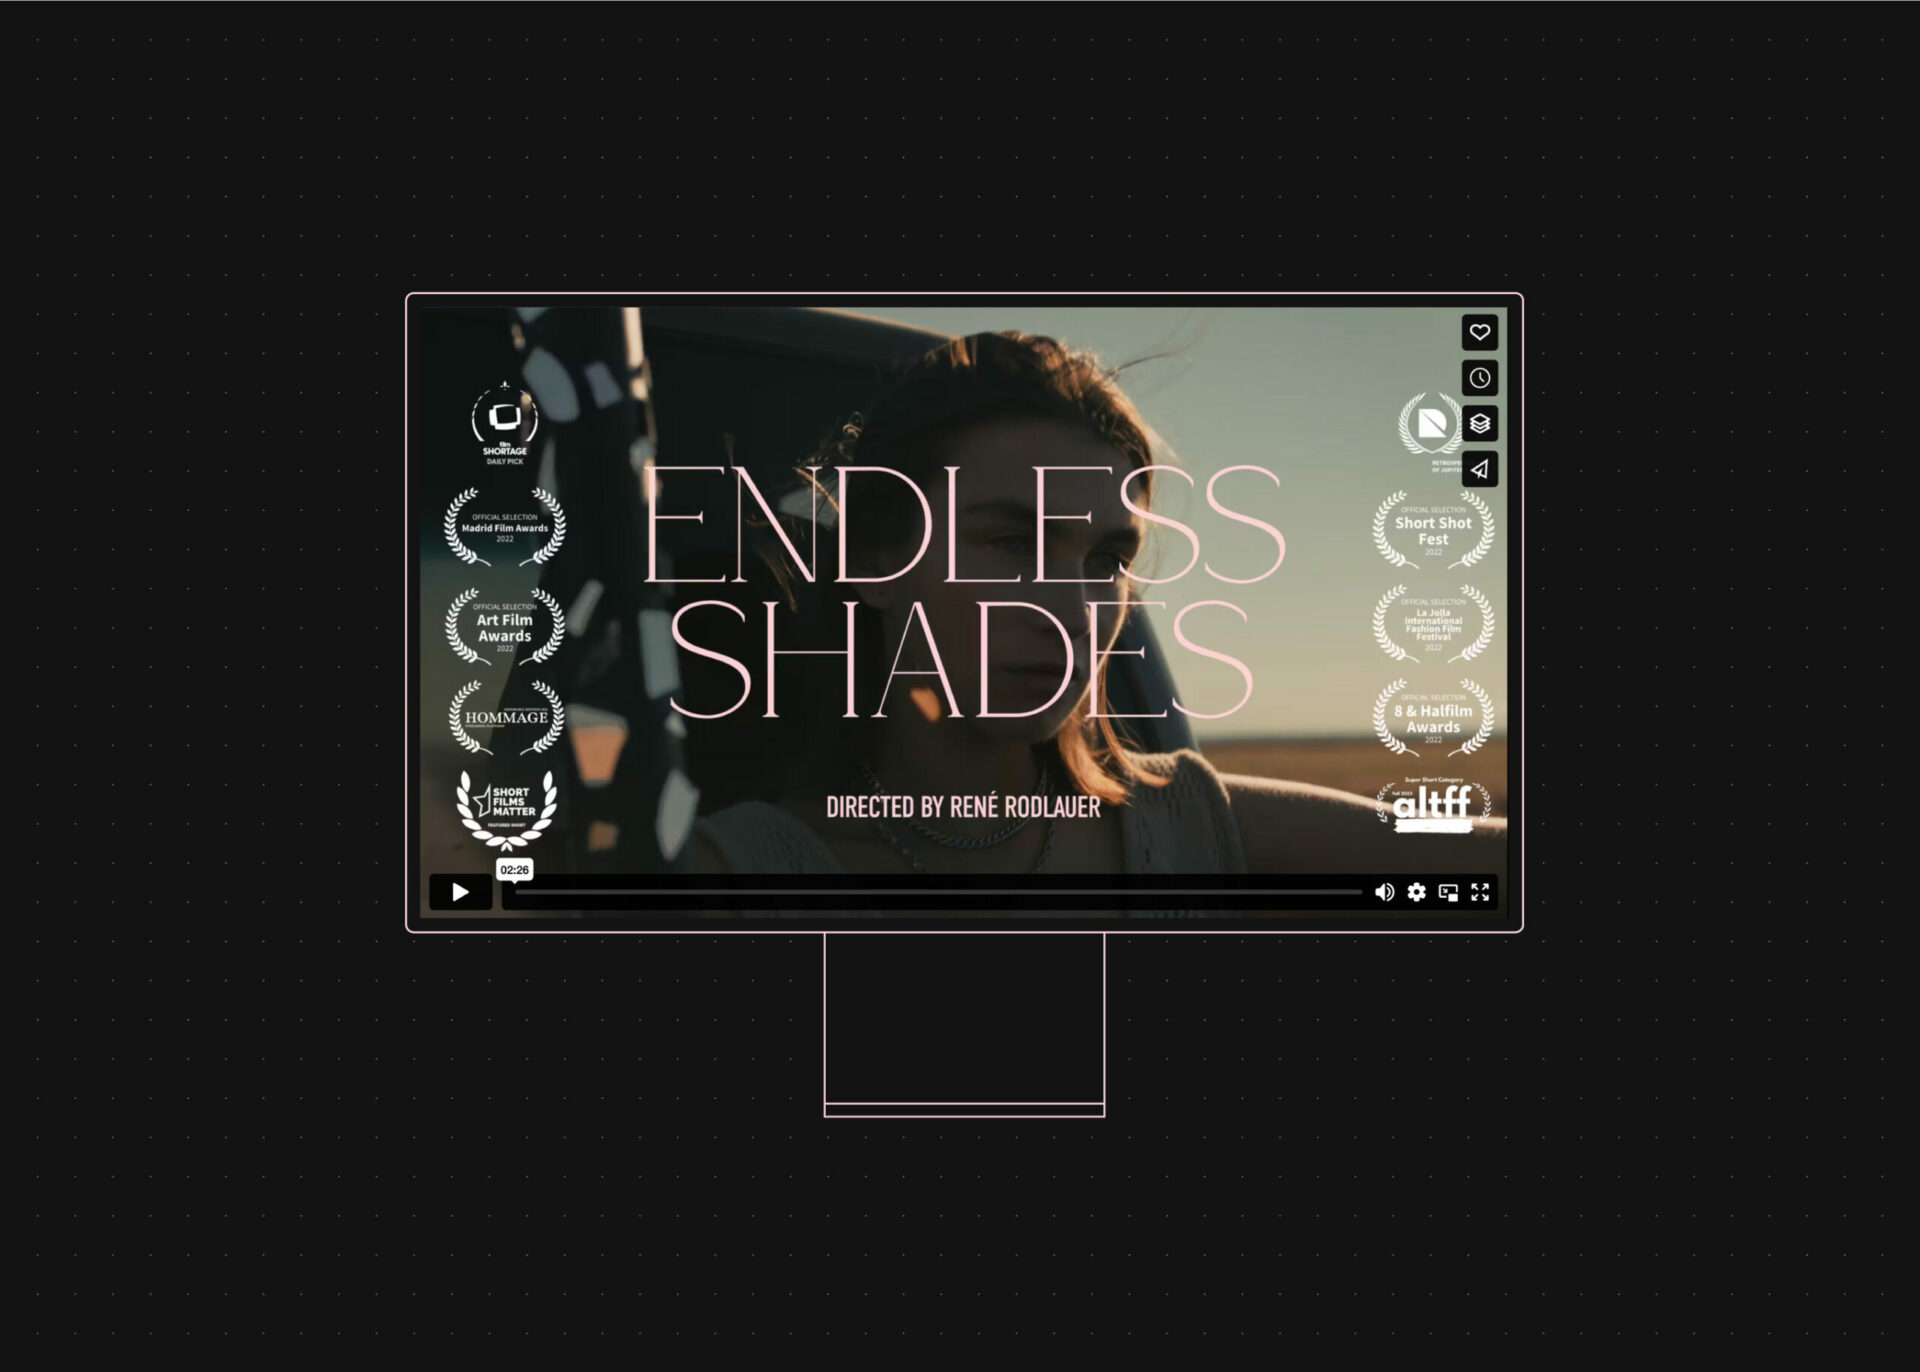 Screenshot des Films Endless Shades mit Filmtitel.